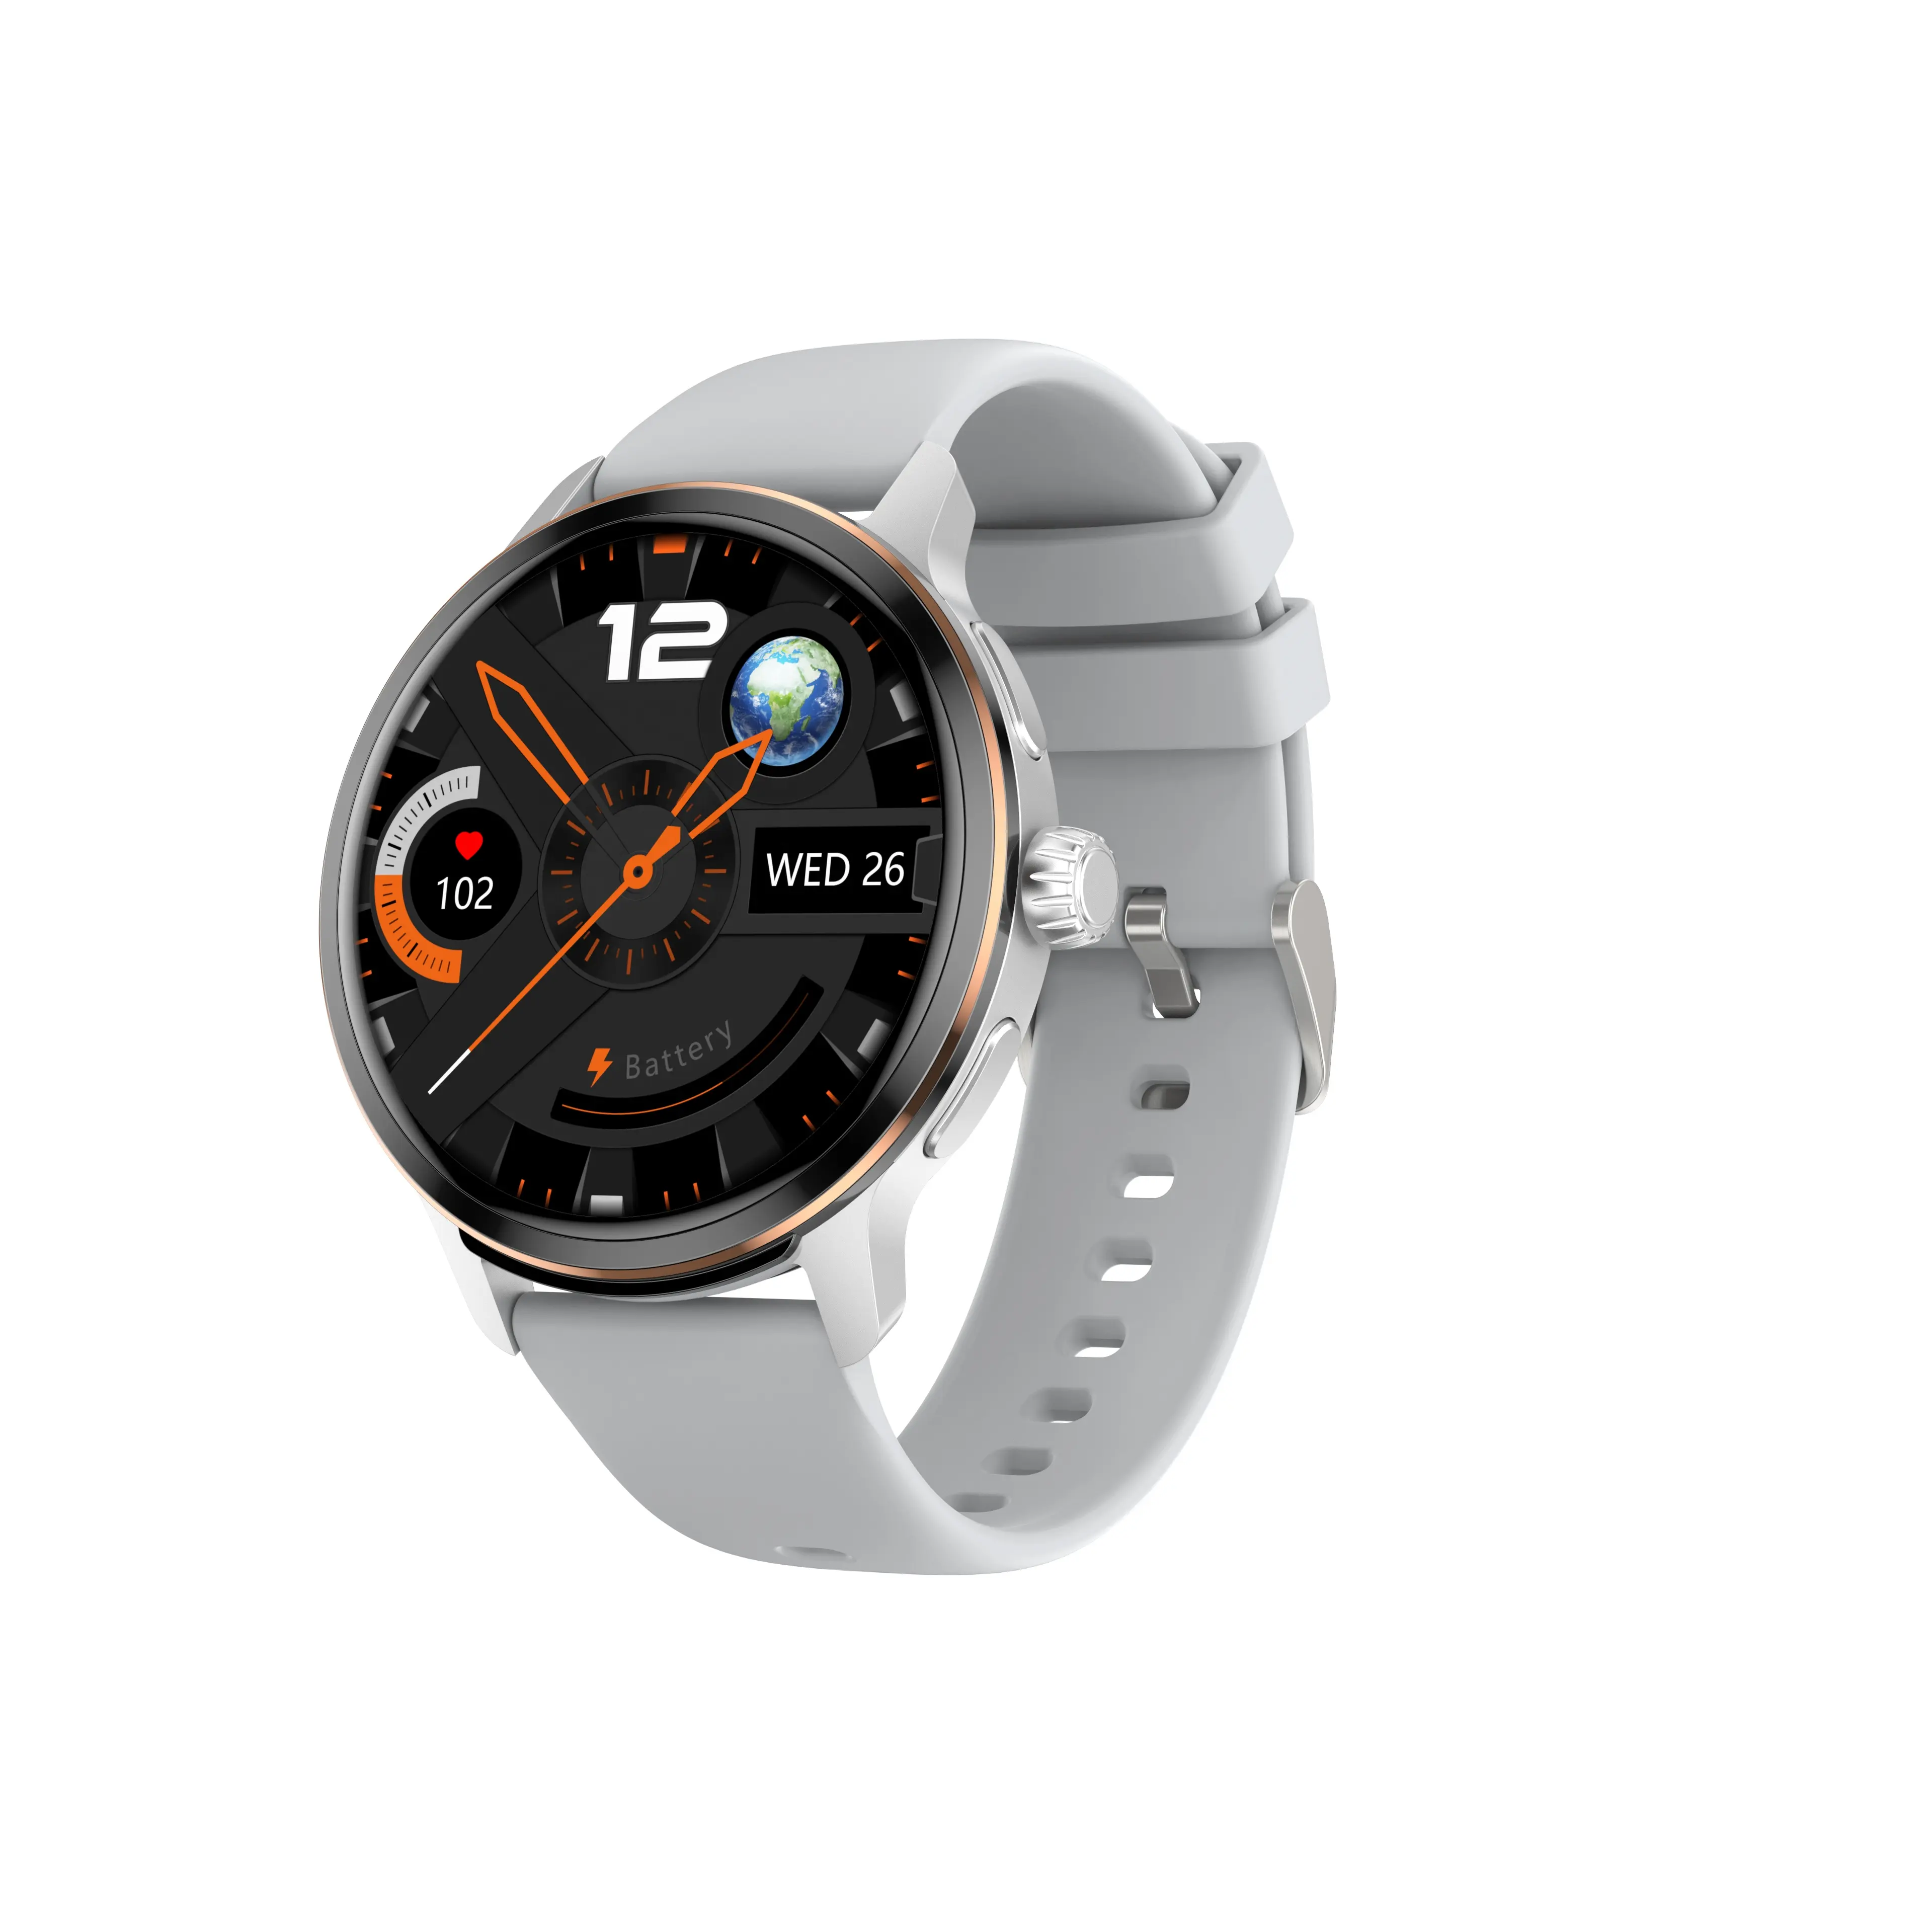 Günstige t800 24 stunden HR 412 NFC BT Call ultra touch AI smartwatch in niedrigem Preis berührungsuhr mobiltelefon